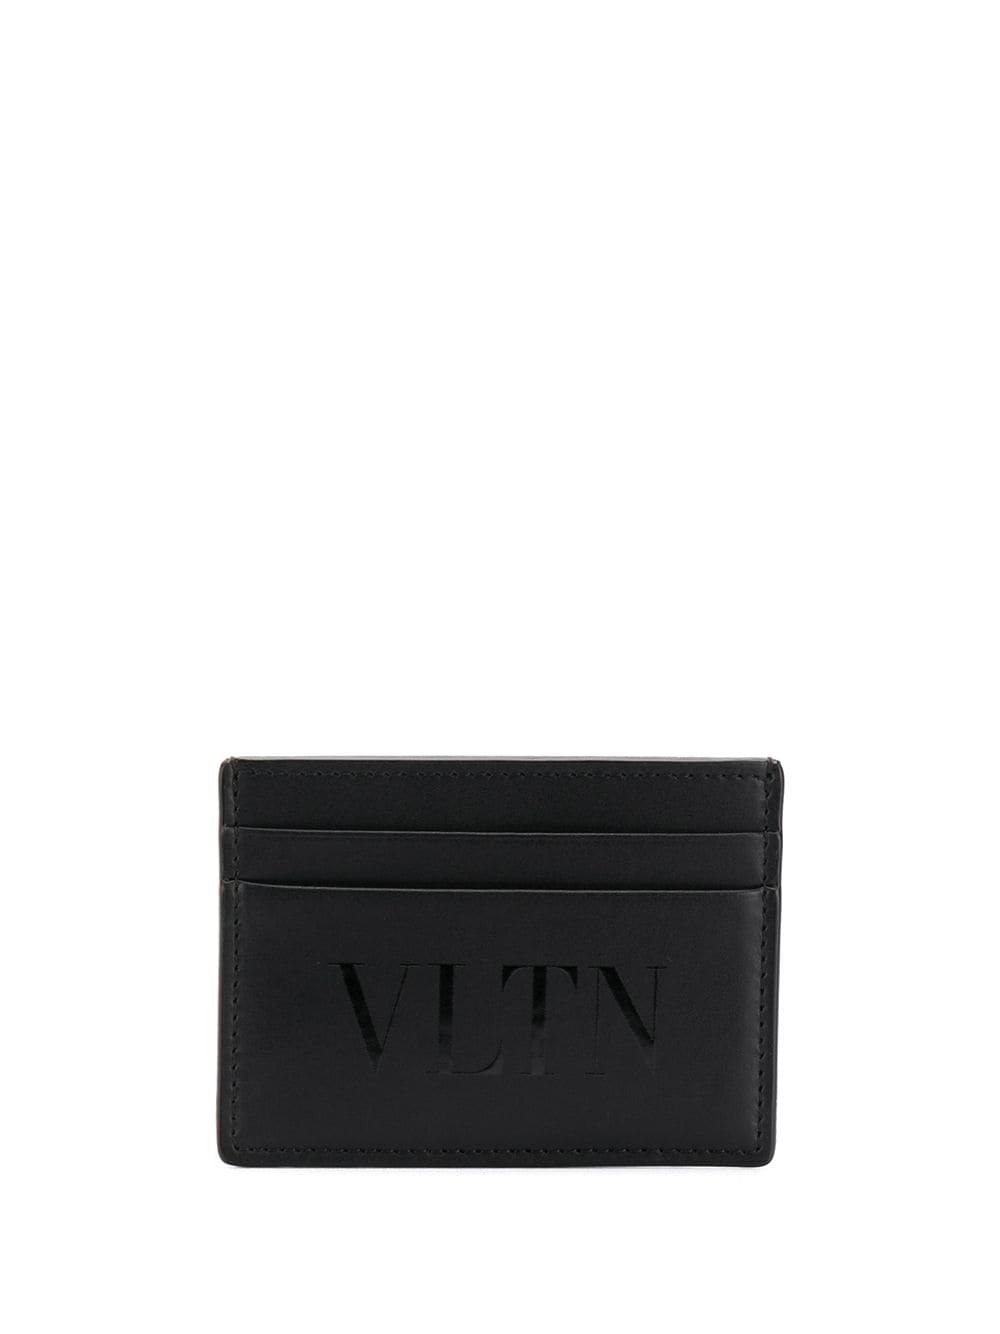 Valentino Garavani Men's Vltn Cardholder - White - Wallets